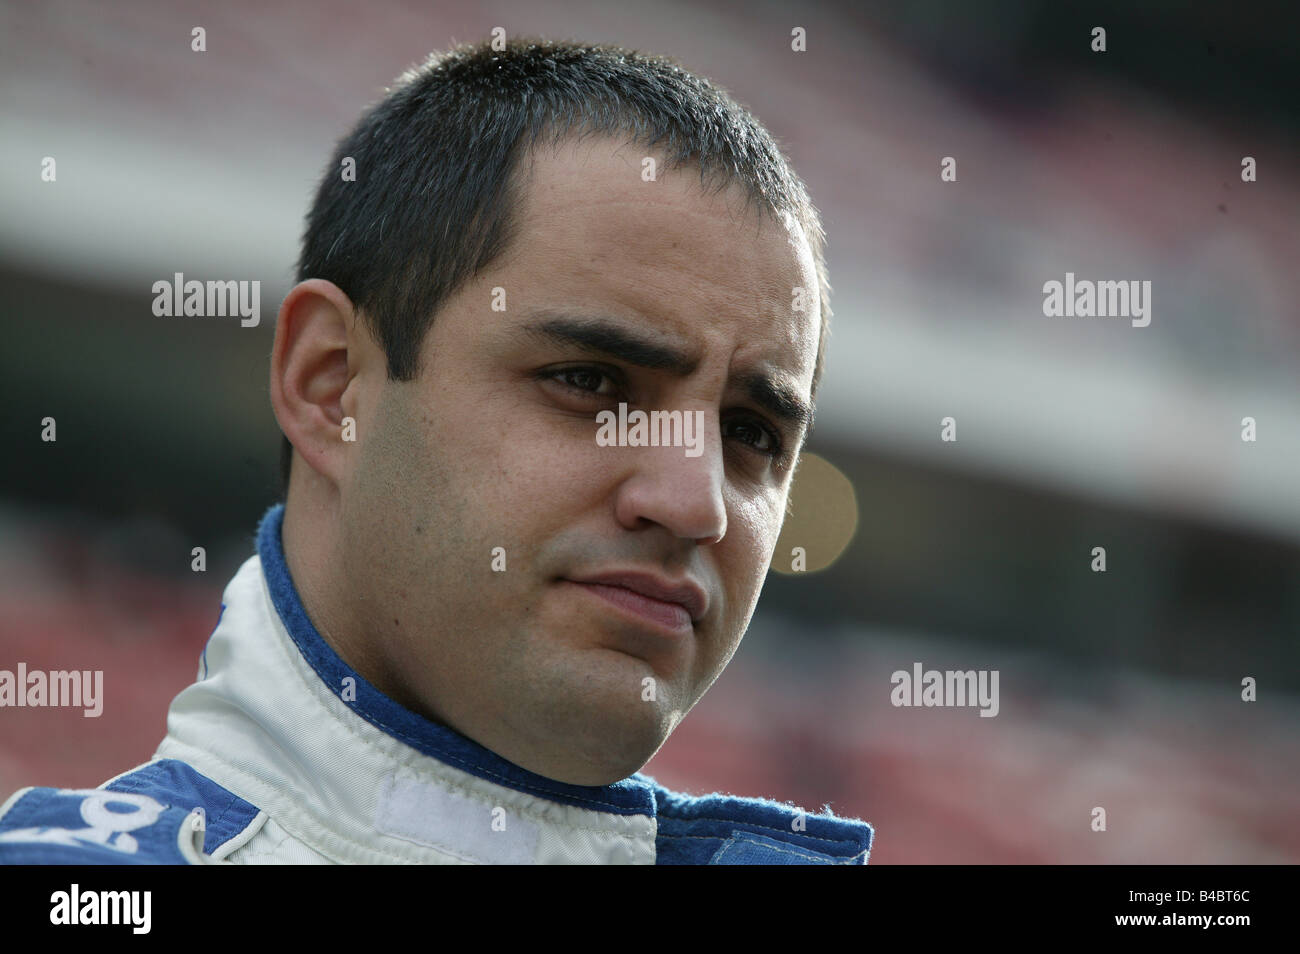 engine sport, Formel 1, Juan Pablo Montoya,  training, Persons, Race driver, Portrait, photographer: Daniel Reinhard Stock Photo